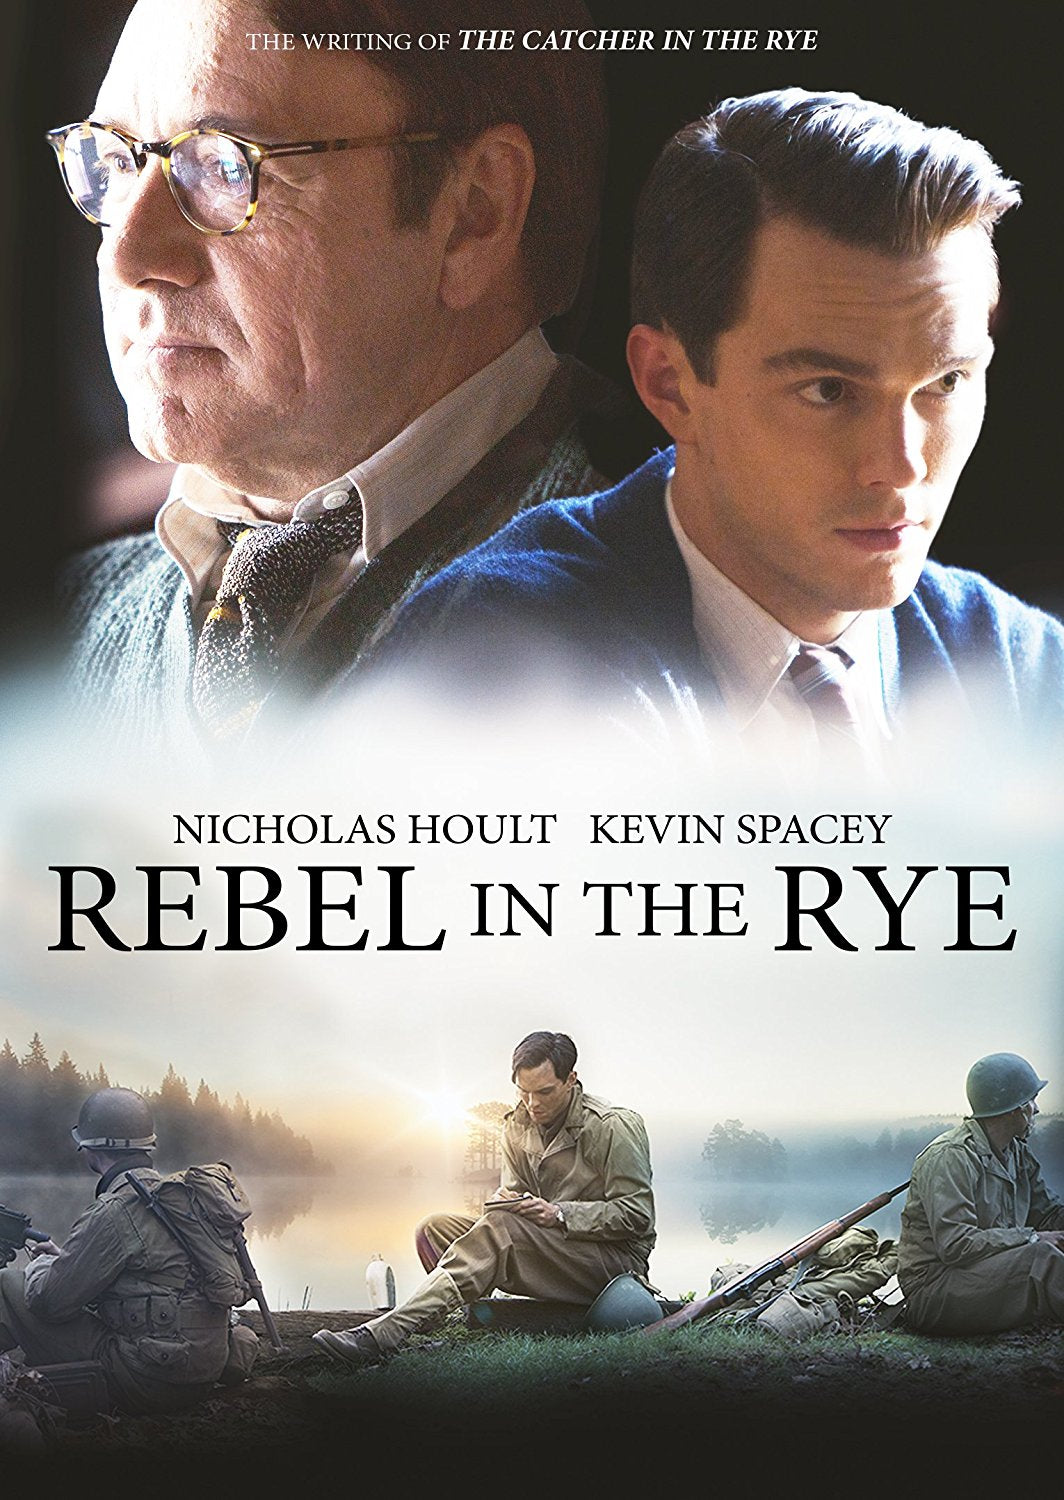 Rebel in the Rye poster